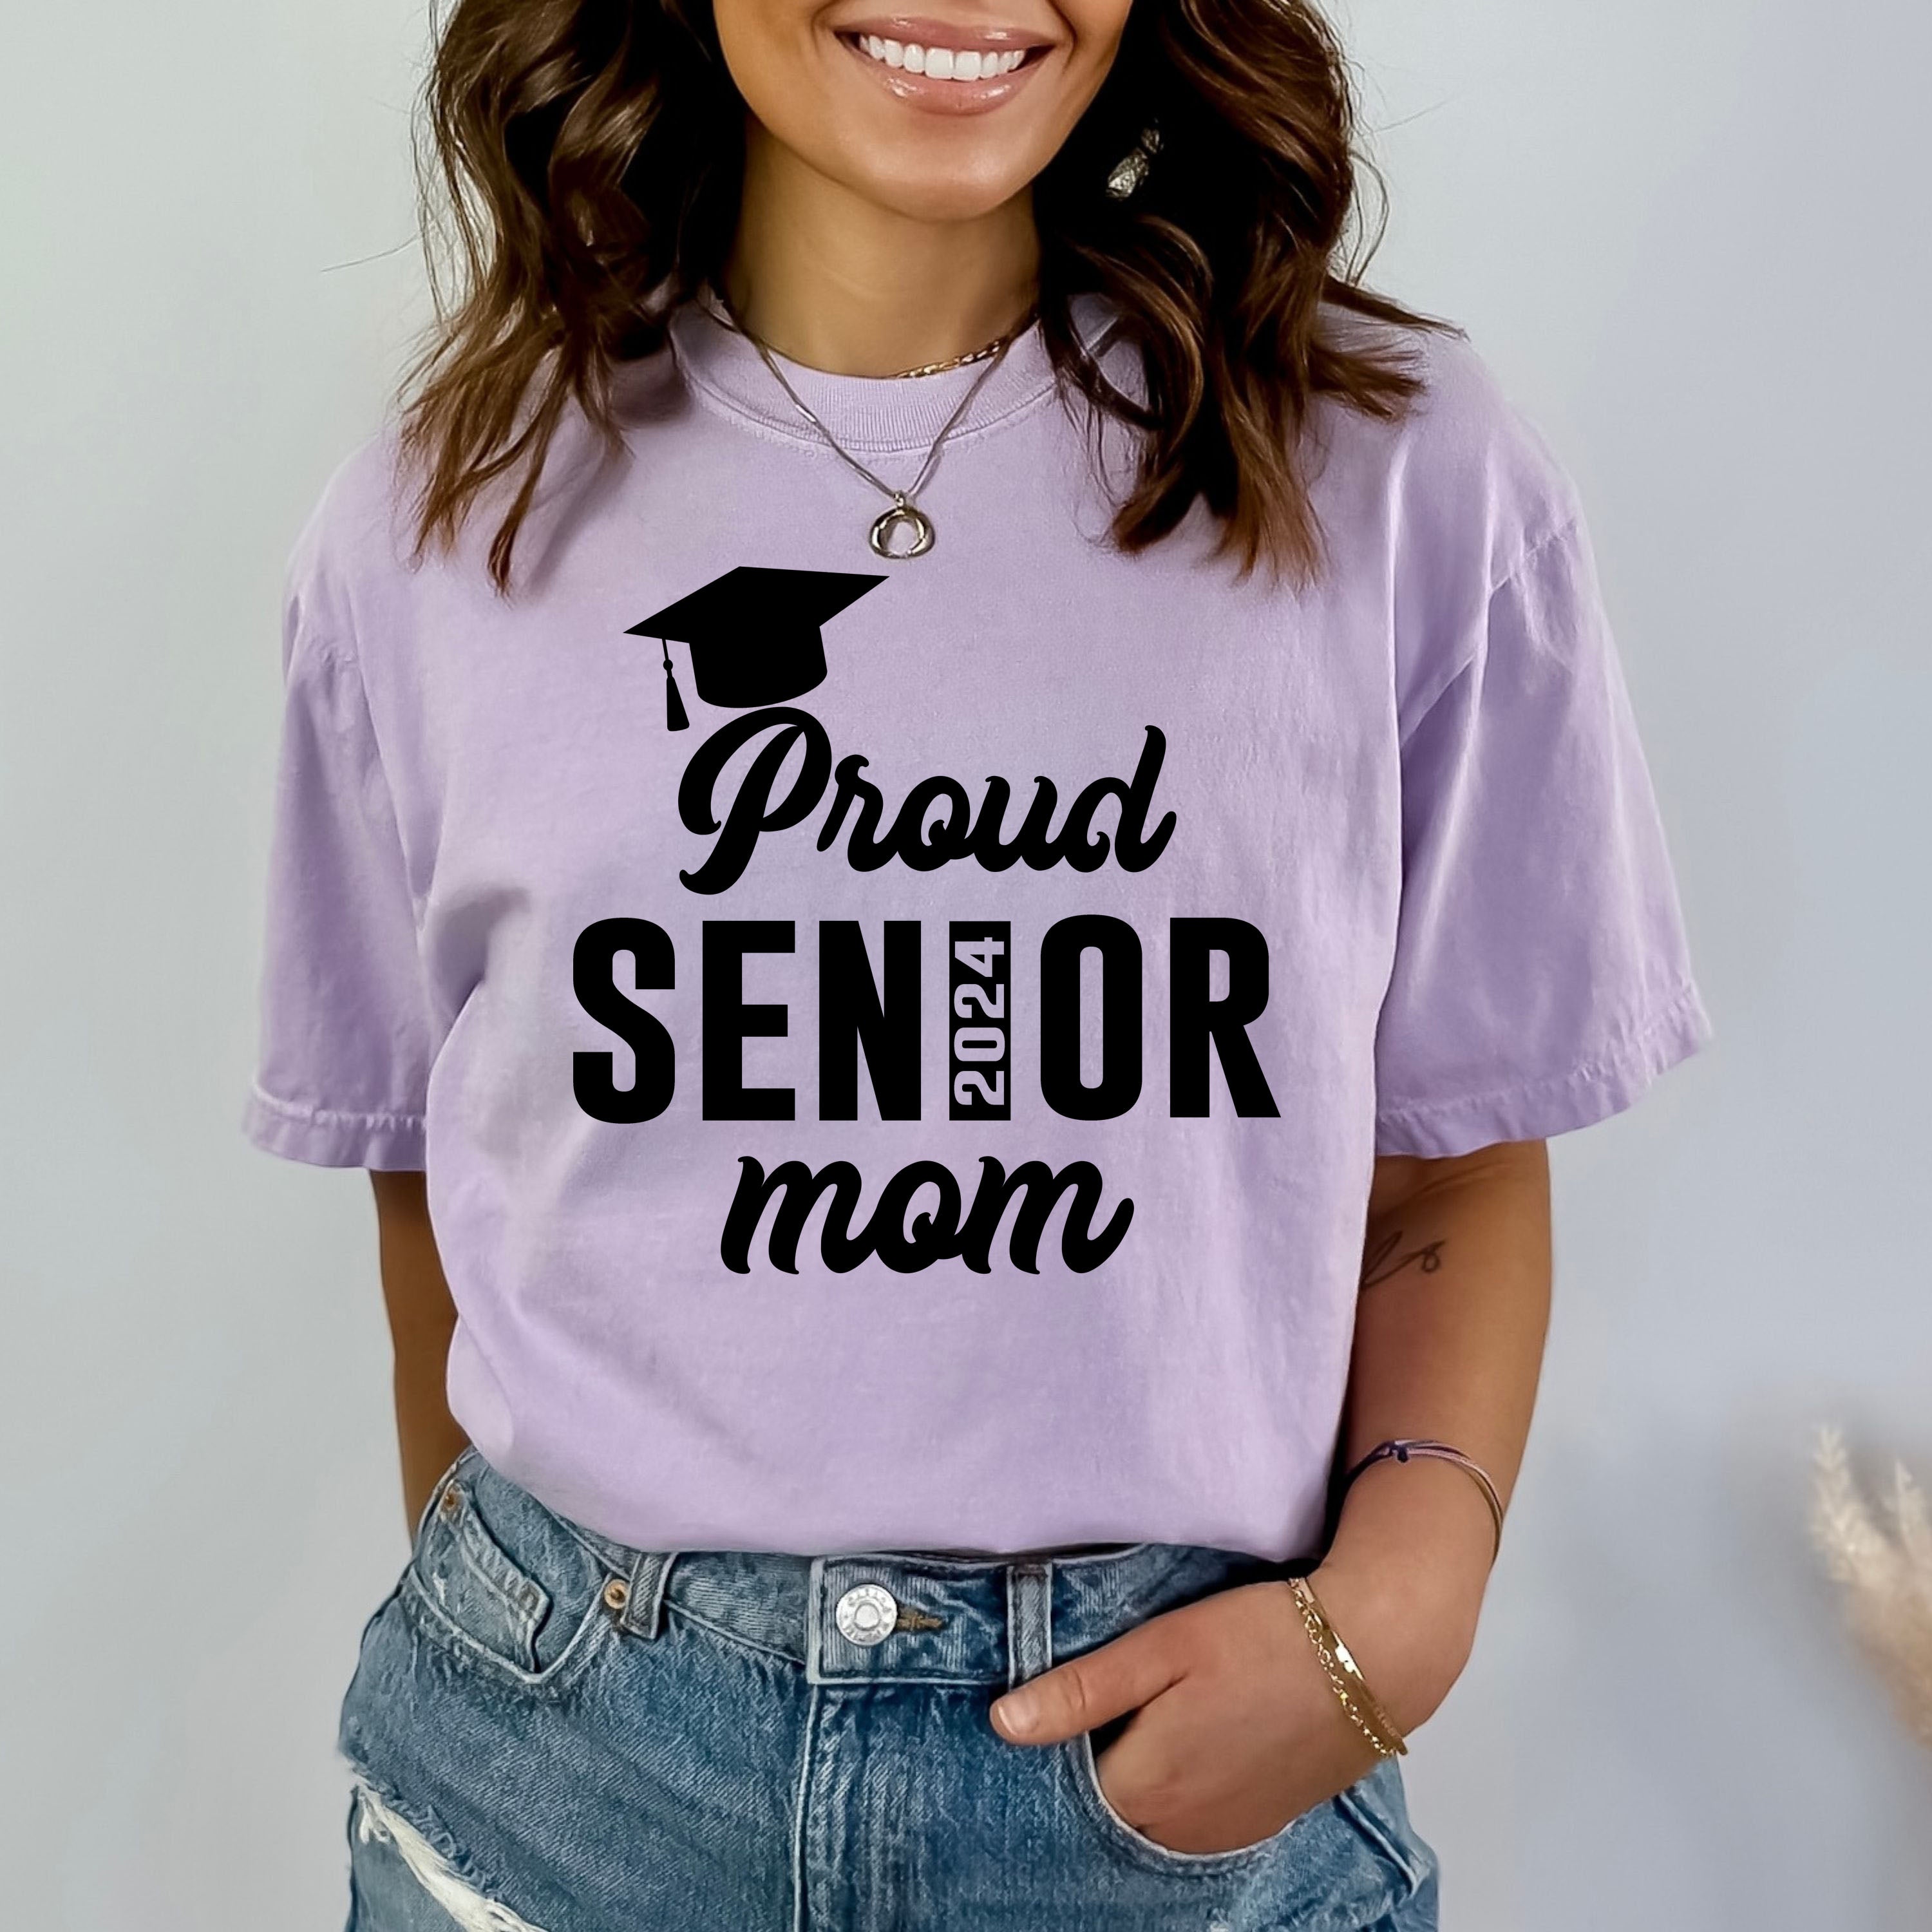 Proud Senior Mom - Bella canvas